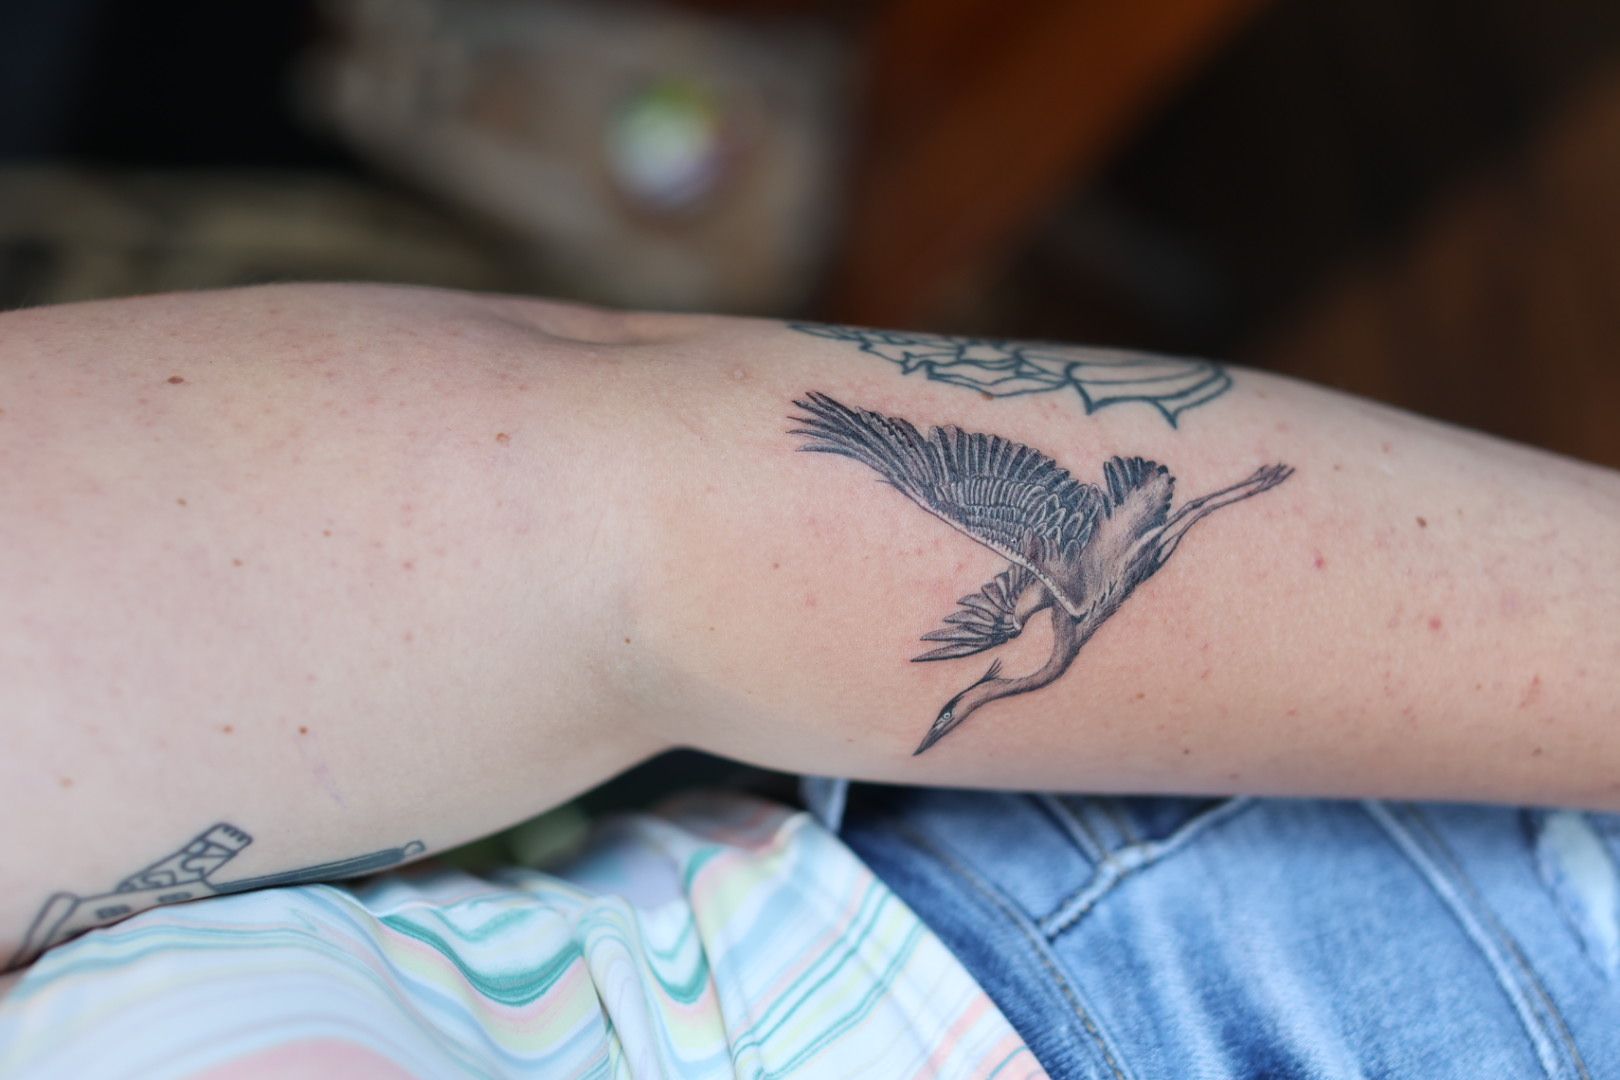 Tattoo tagged with small single needle animal tiny bird ifttt  little upper back doy medium size crane  inkedappcom